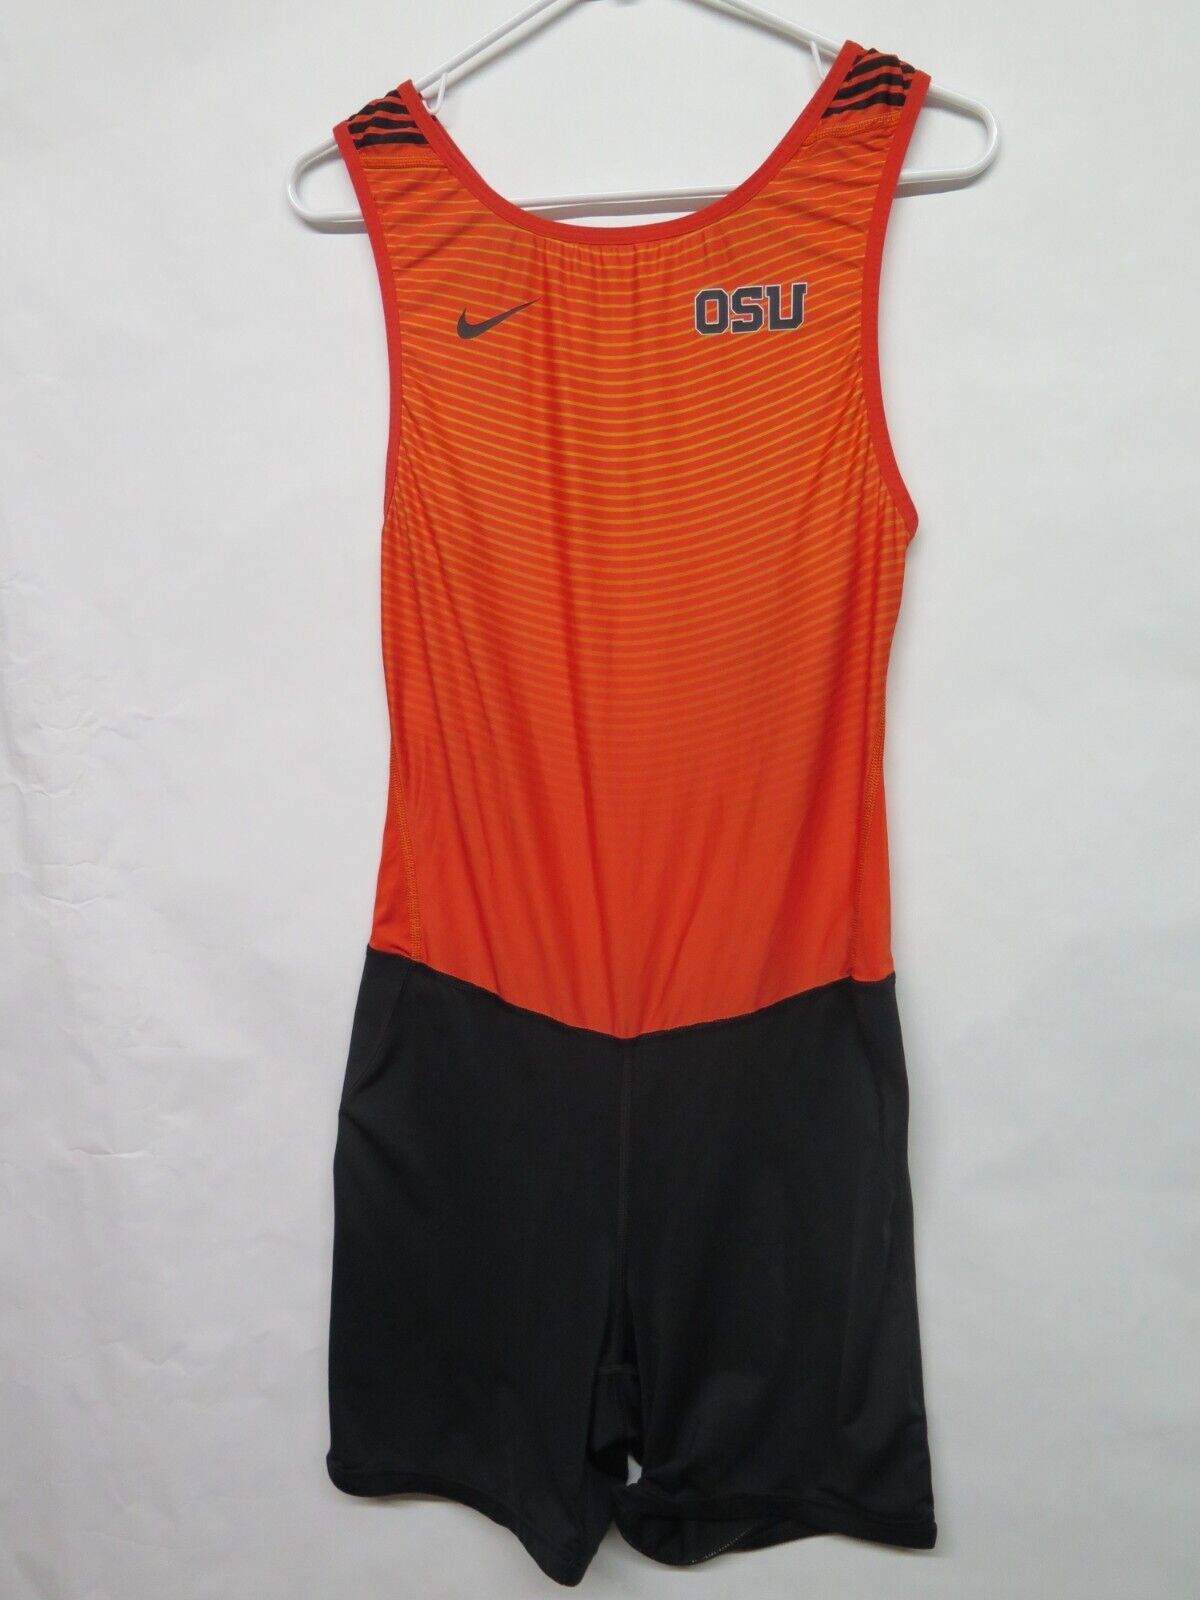 Nike USA Made Oregon State Beavers Wrestling Track Singlet OSU Issued Sz M Rare - $237.45